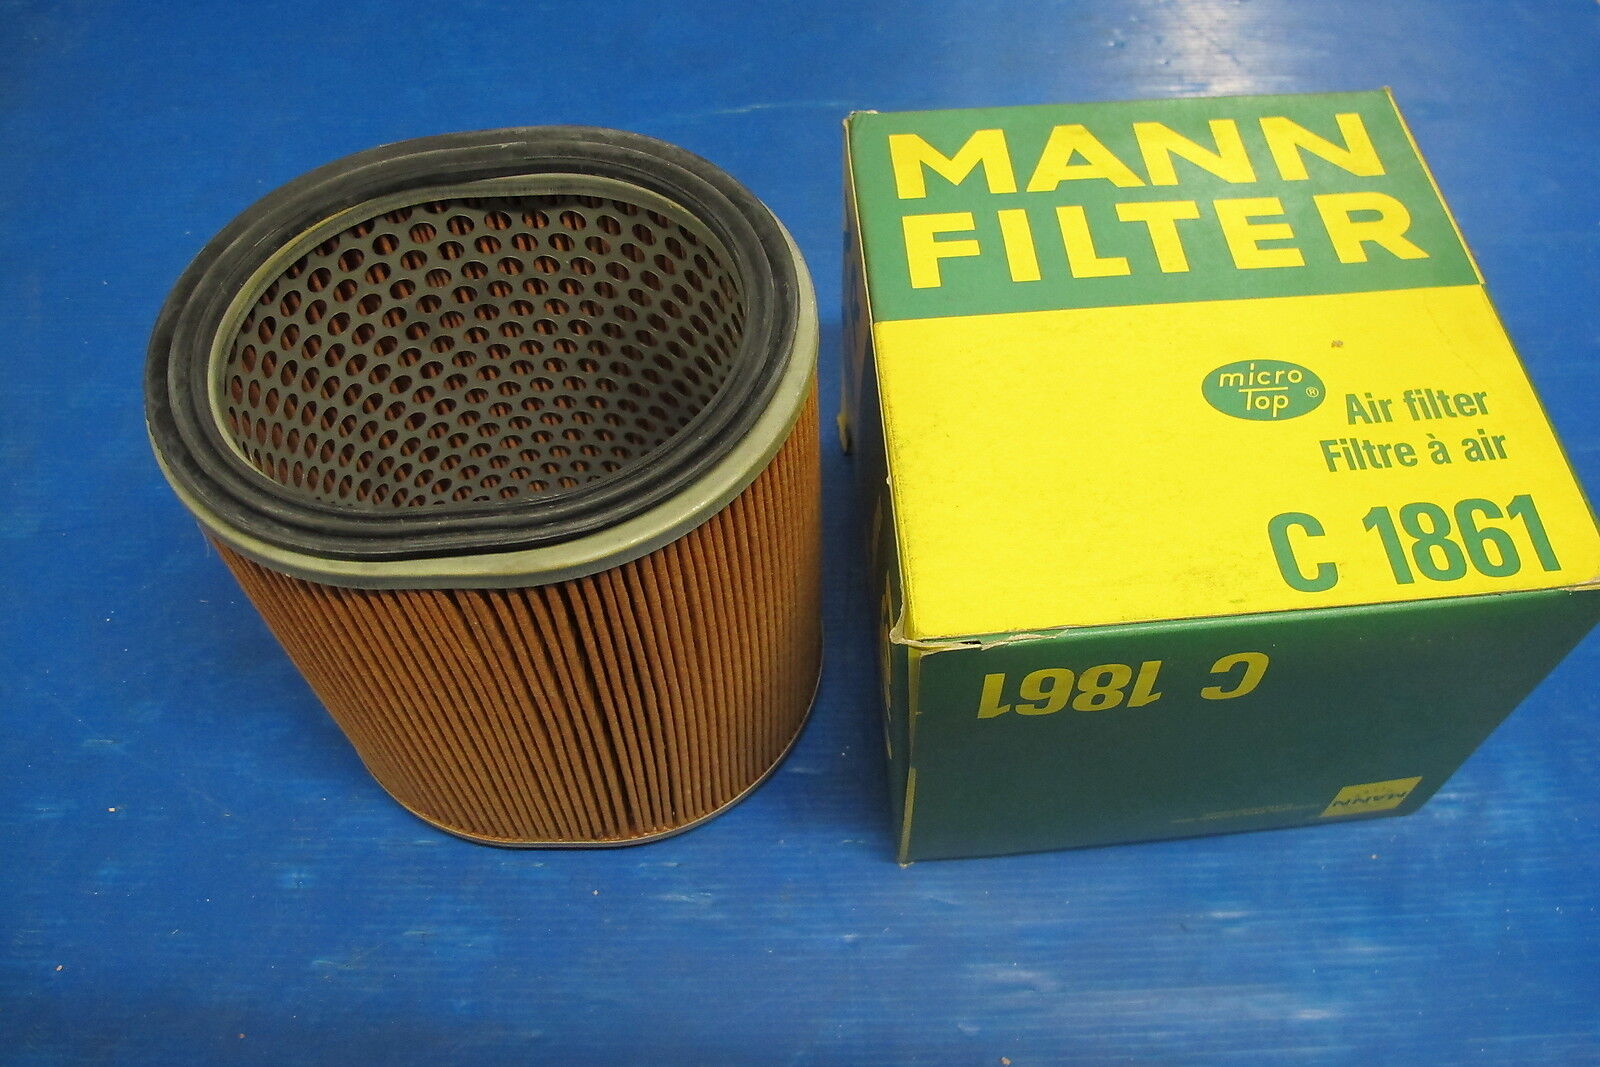 Air Filter Mann Filter for: Mitsubishi: COLT, Galant, Sapporo, Cordia